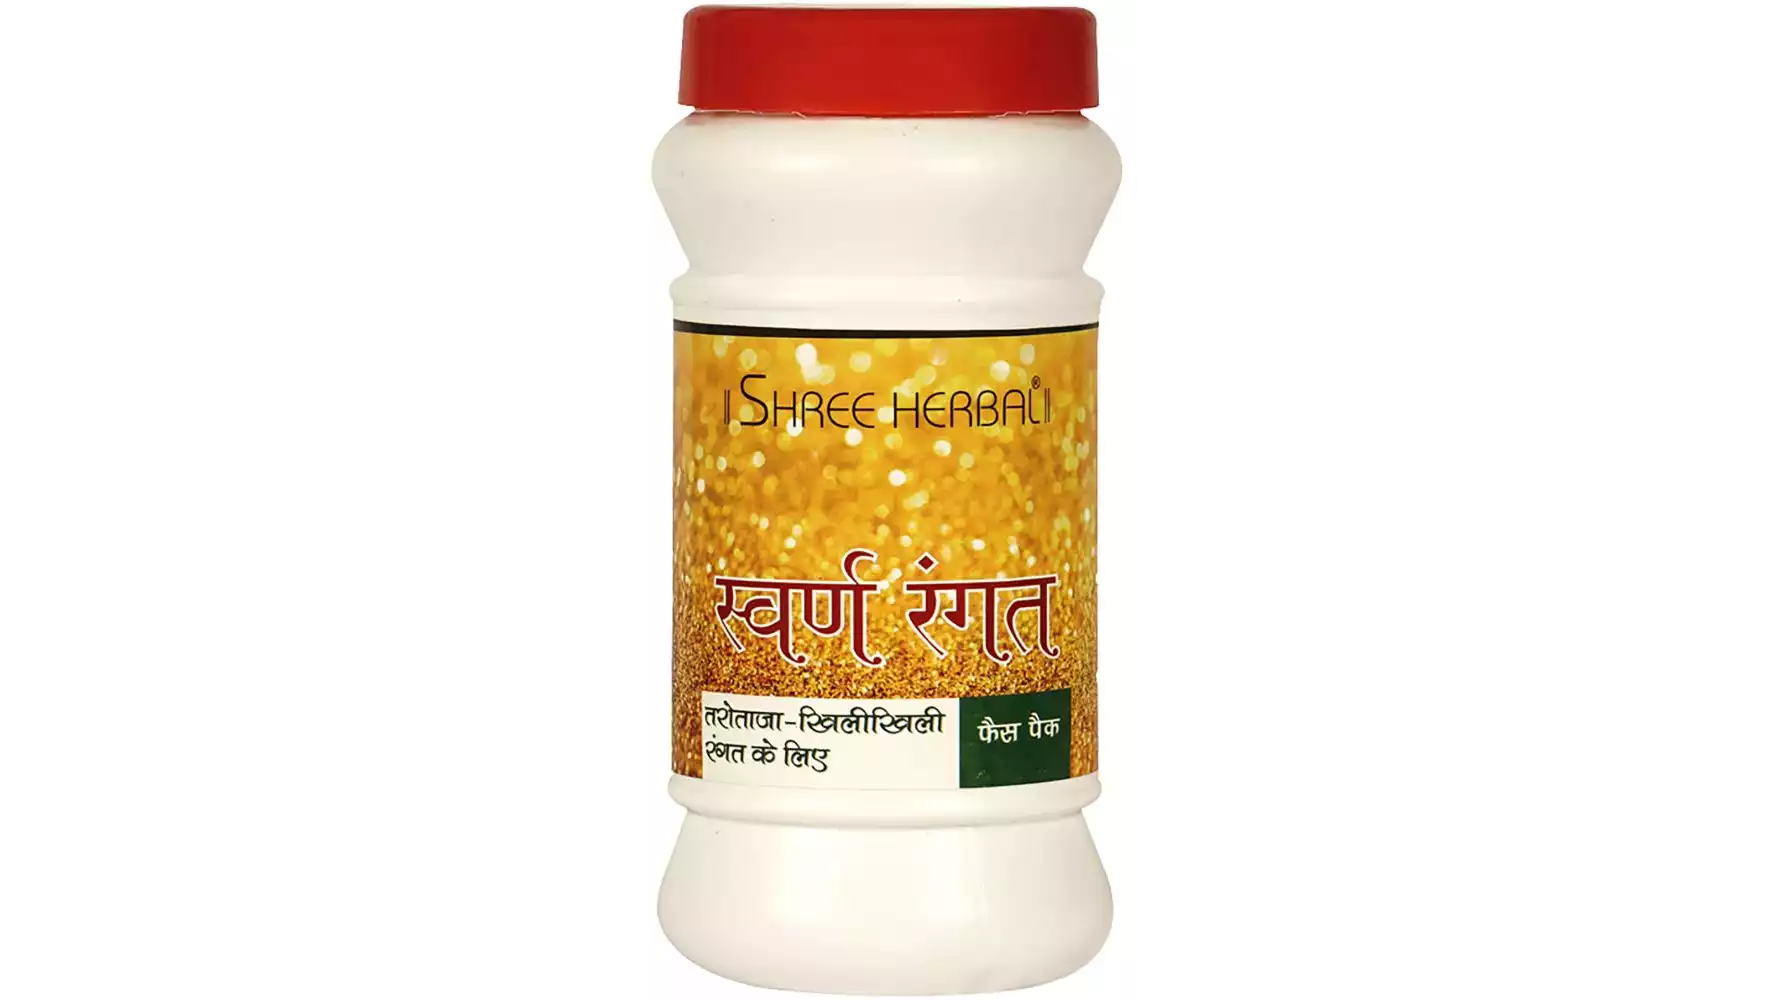 Shree Herbal Swarn Rangat Face Pack (100g)